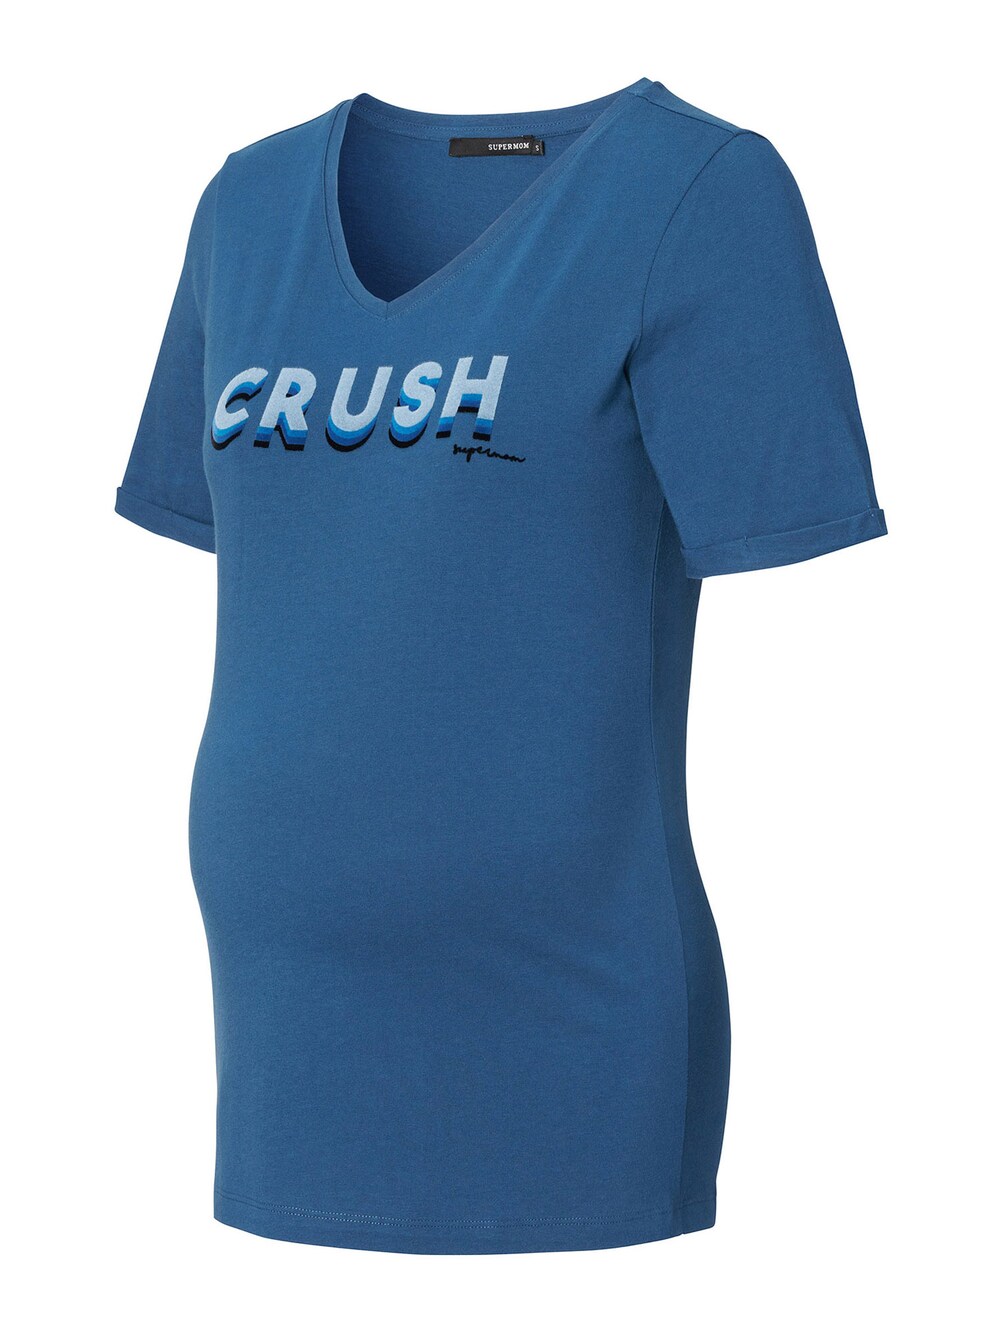 Рубашка Supermom Crush, синий/темно-синий/королевский синий/голубой стул монарх королевский синий